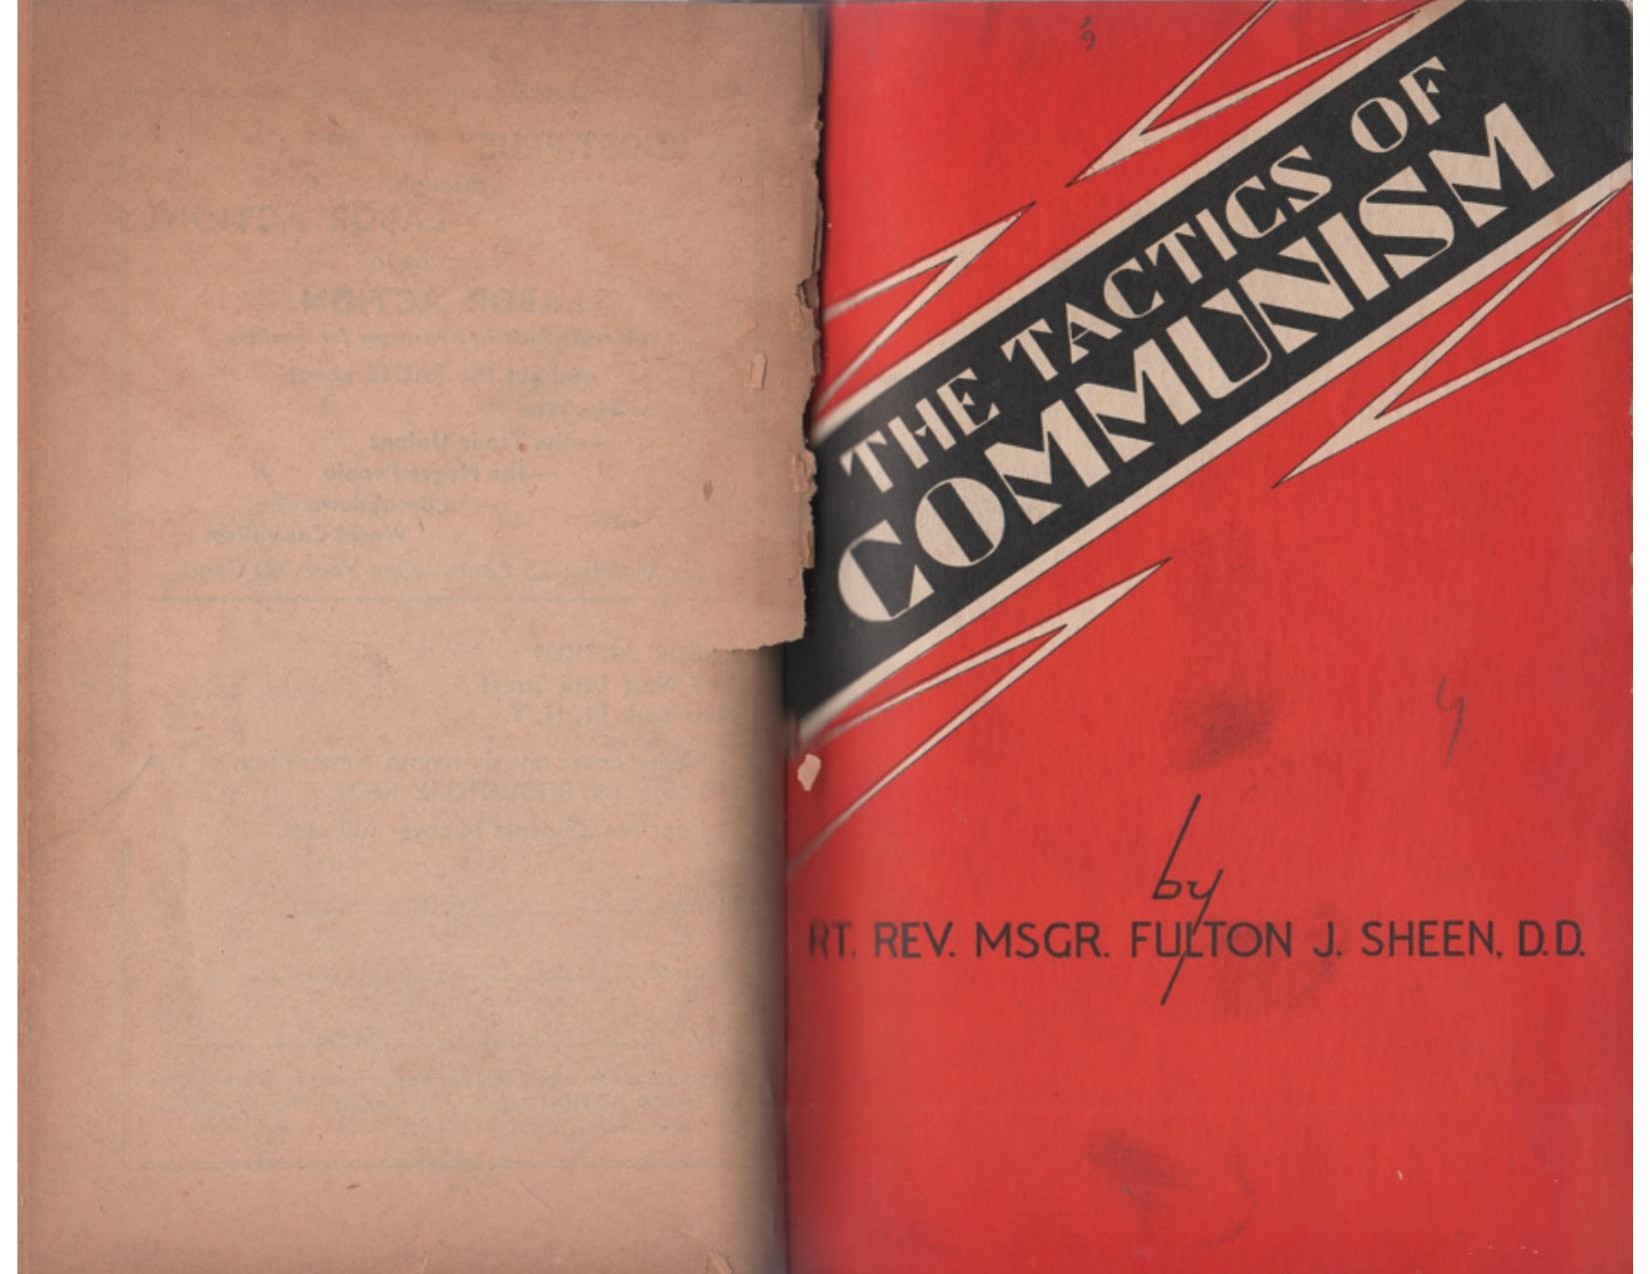 Tactics of Communism (1945) by Fulton J Sheen